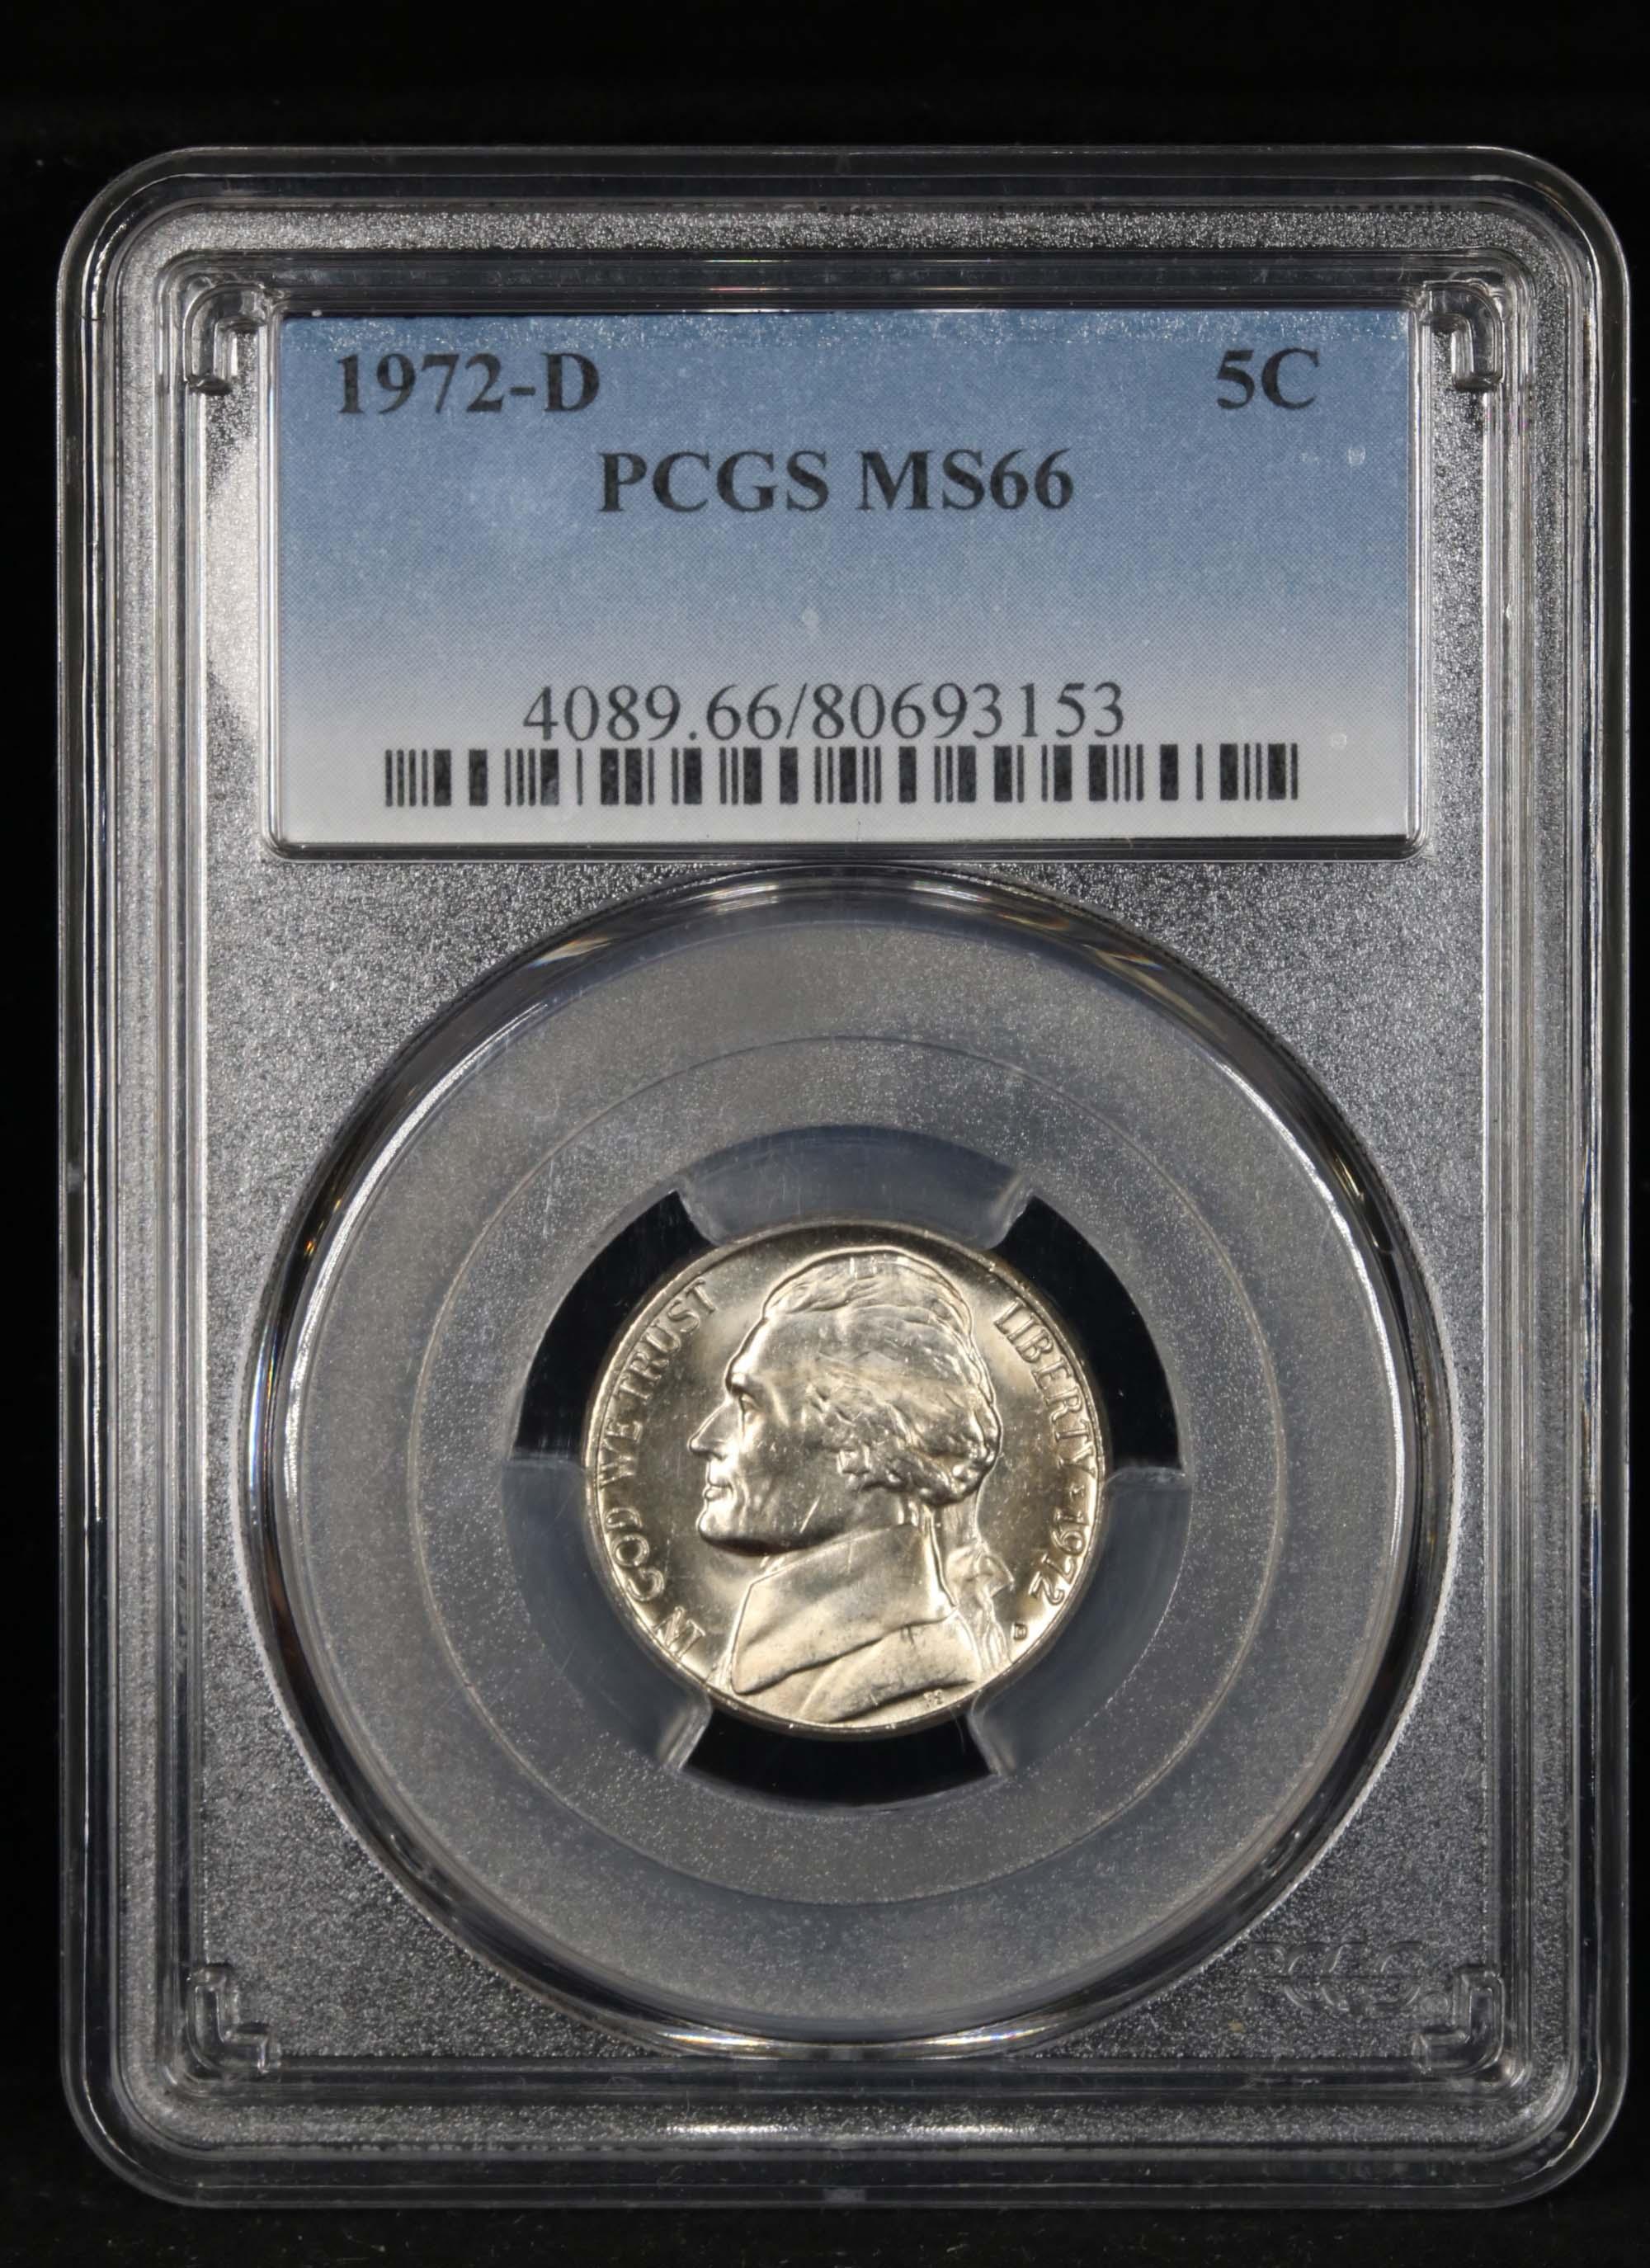 PCGS 1972-d Jefferson Nickel 5c Graded ms66 by PCGS